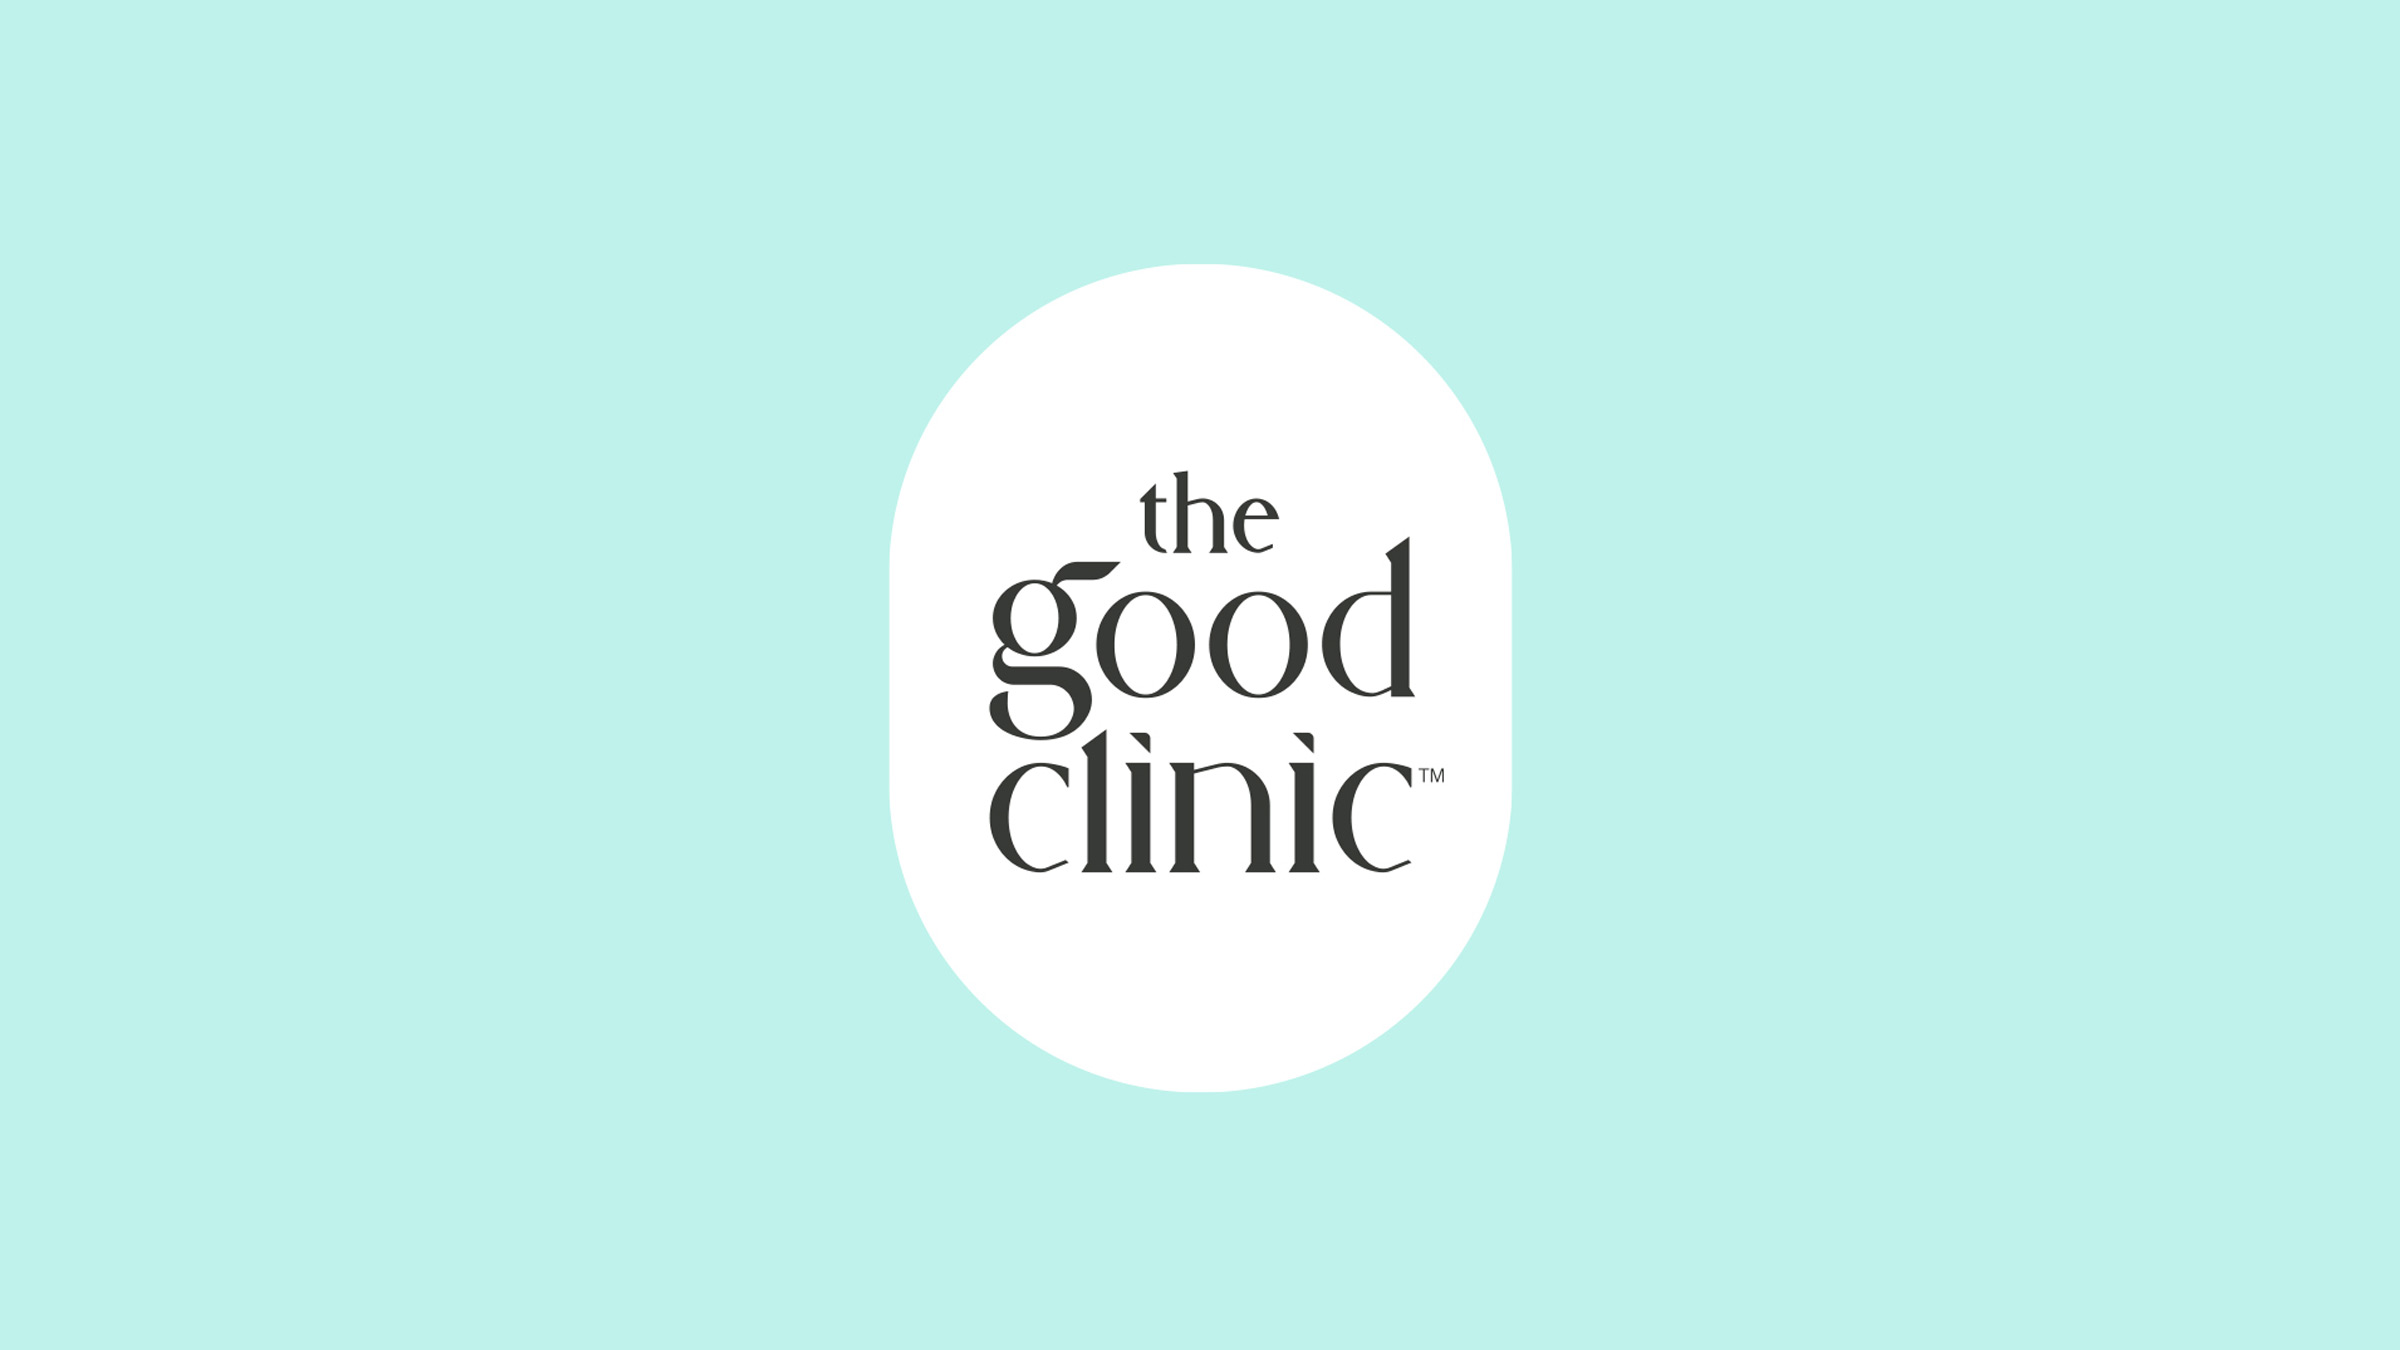 The Good Clinic logo